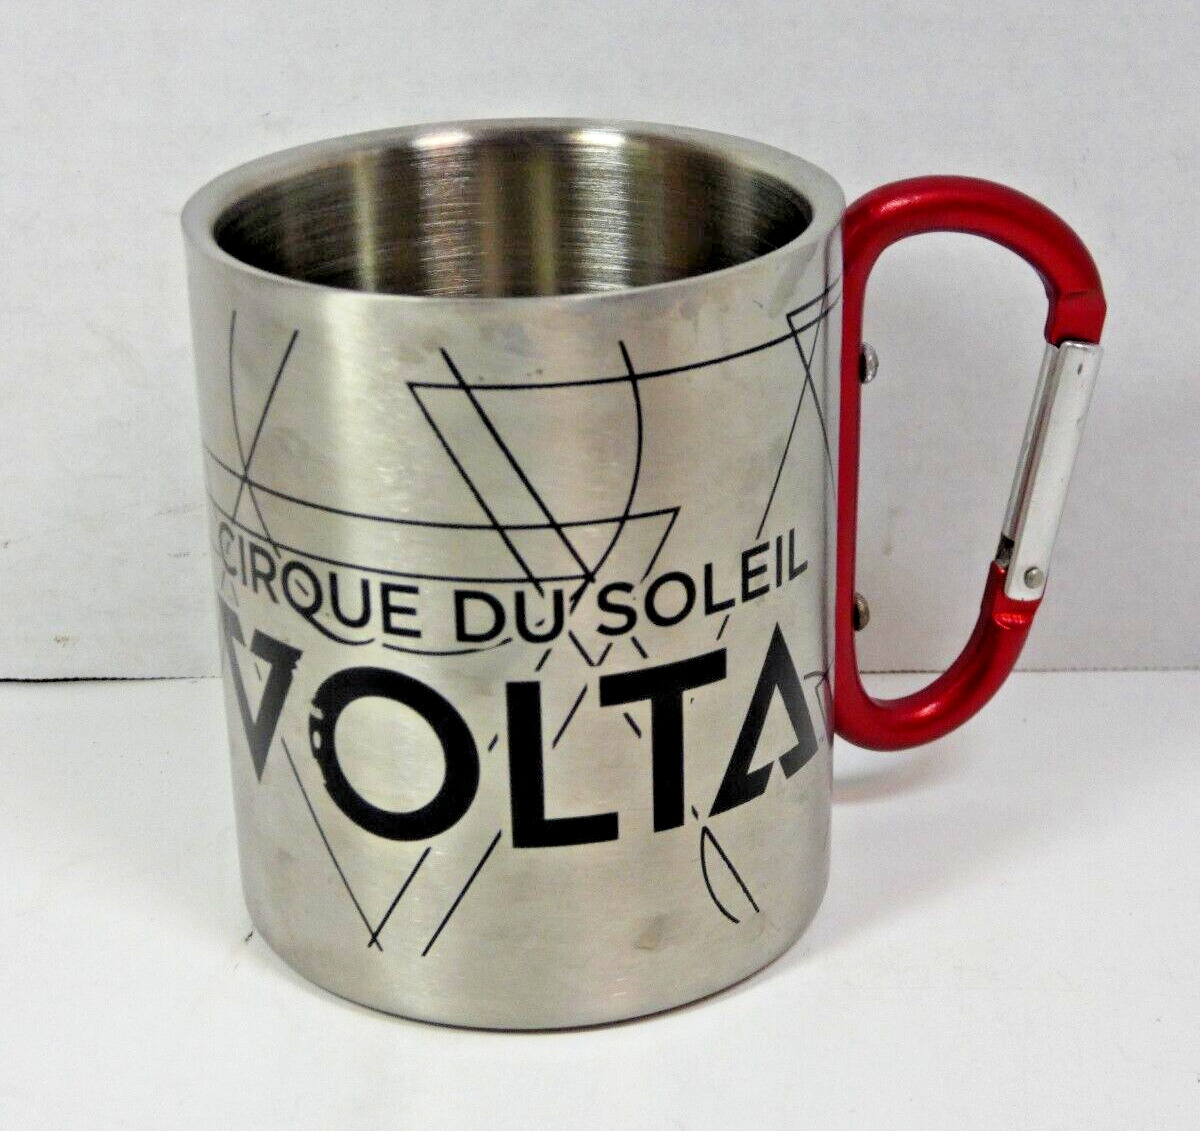 Vintage CIRQUE du SOLEIL-VOLTA Stainless Coffee Mug Cup Carabiner Clip Handle A+